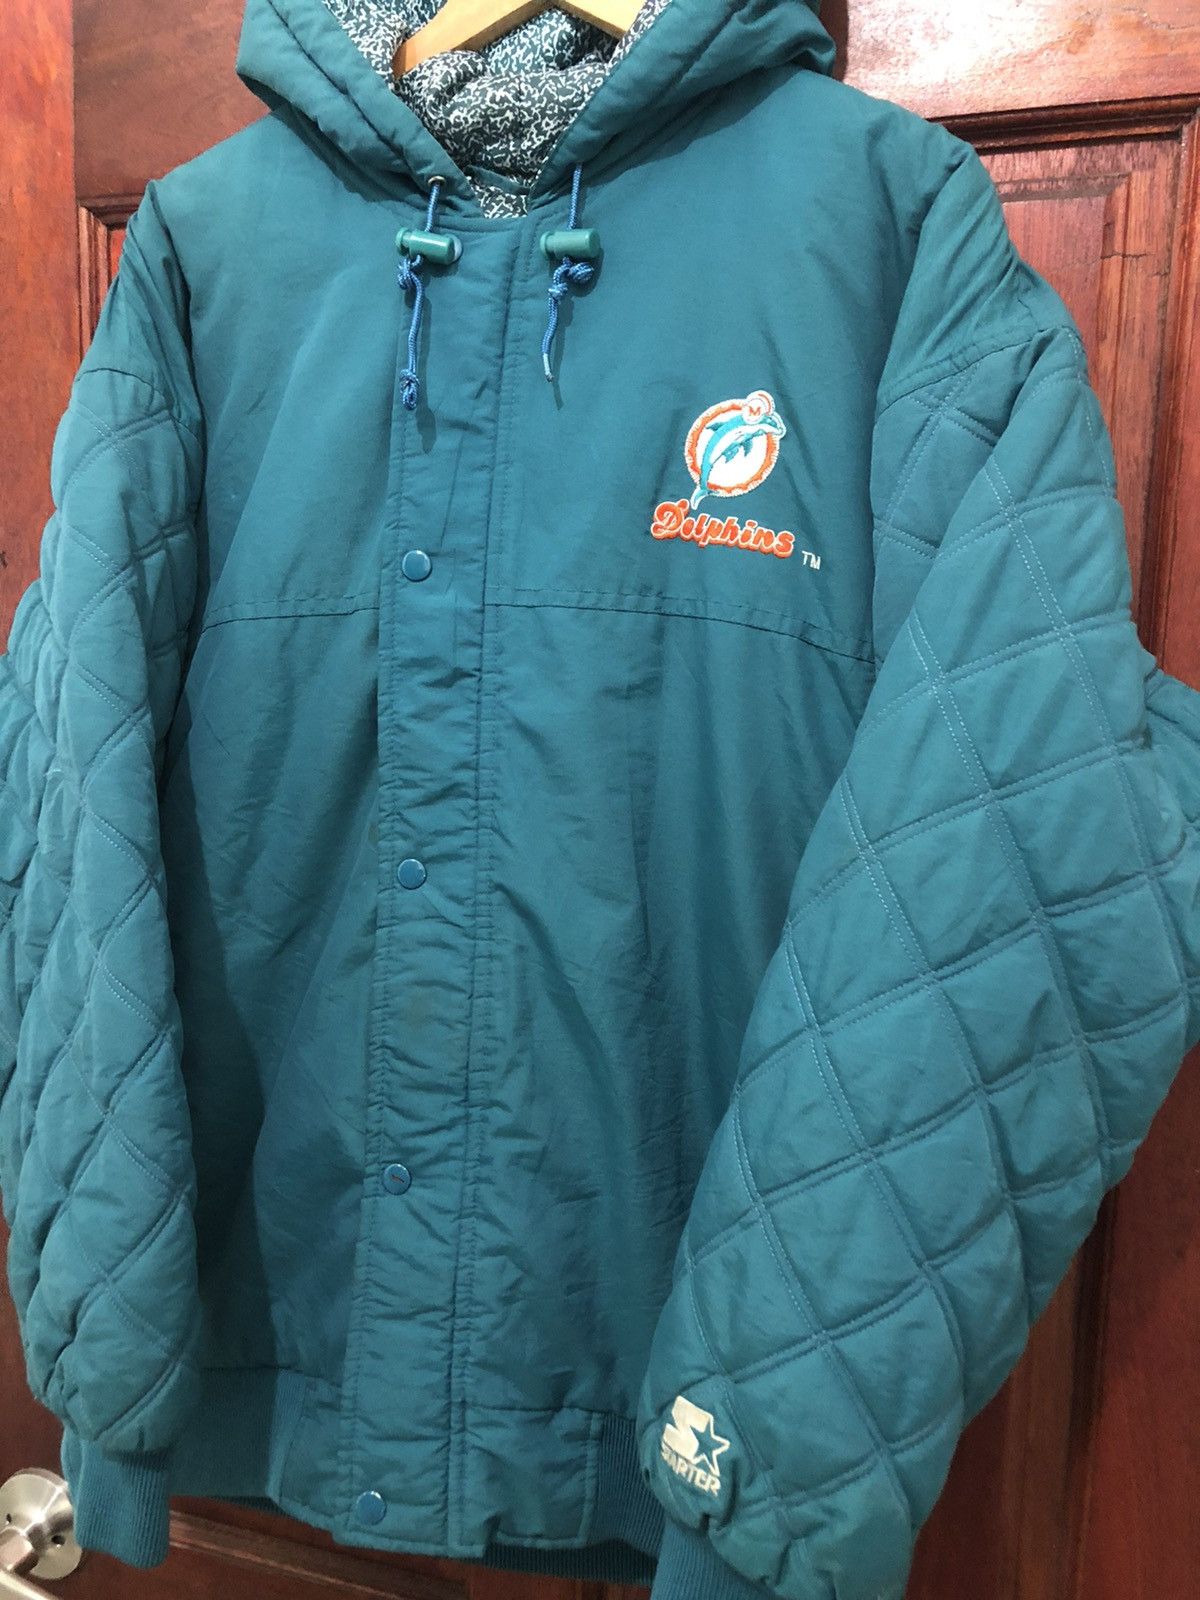 🐬 Starter X NFL Dolphins Quilted Jacket Nice Design - 5